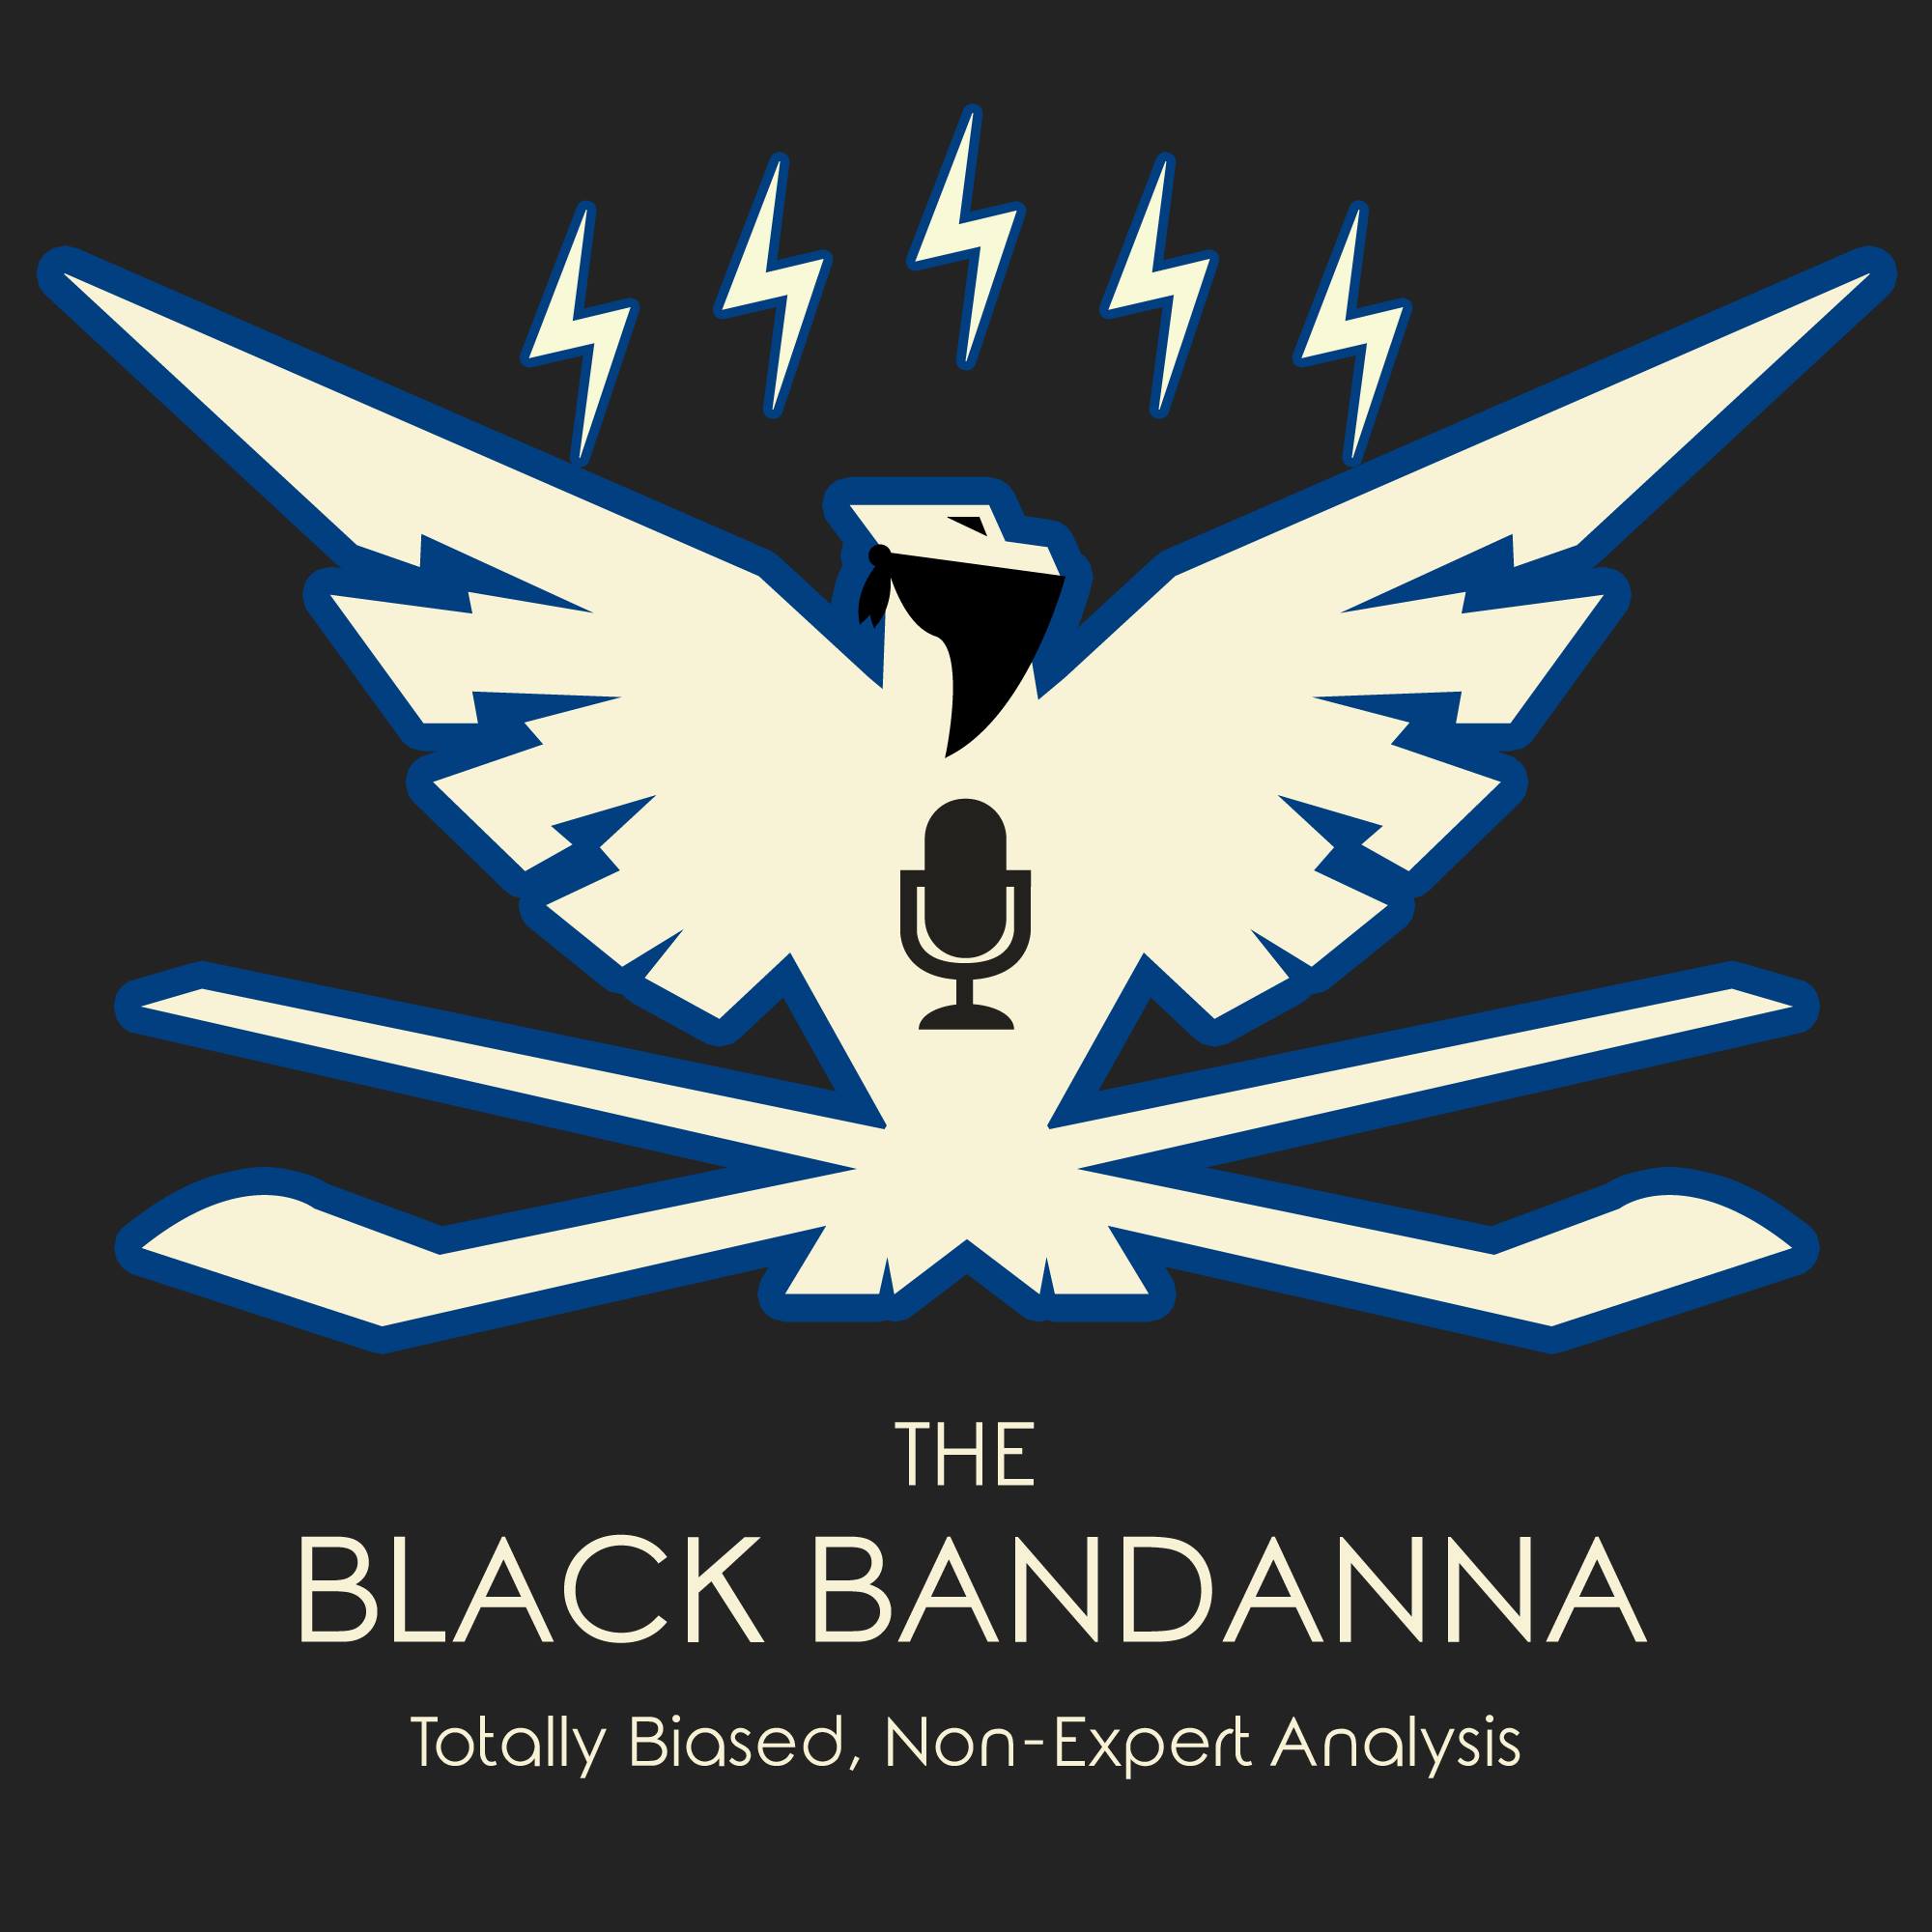 The Black Bandanna